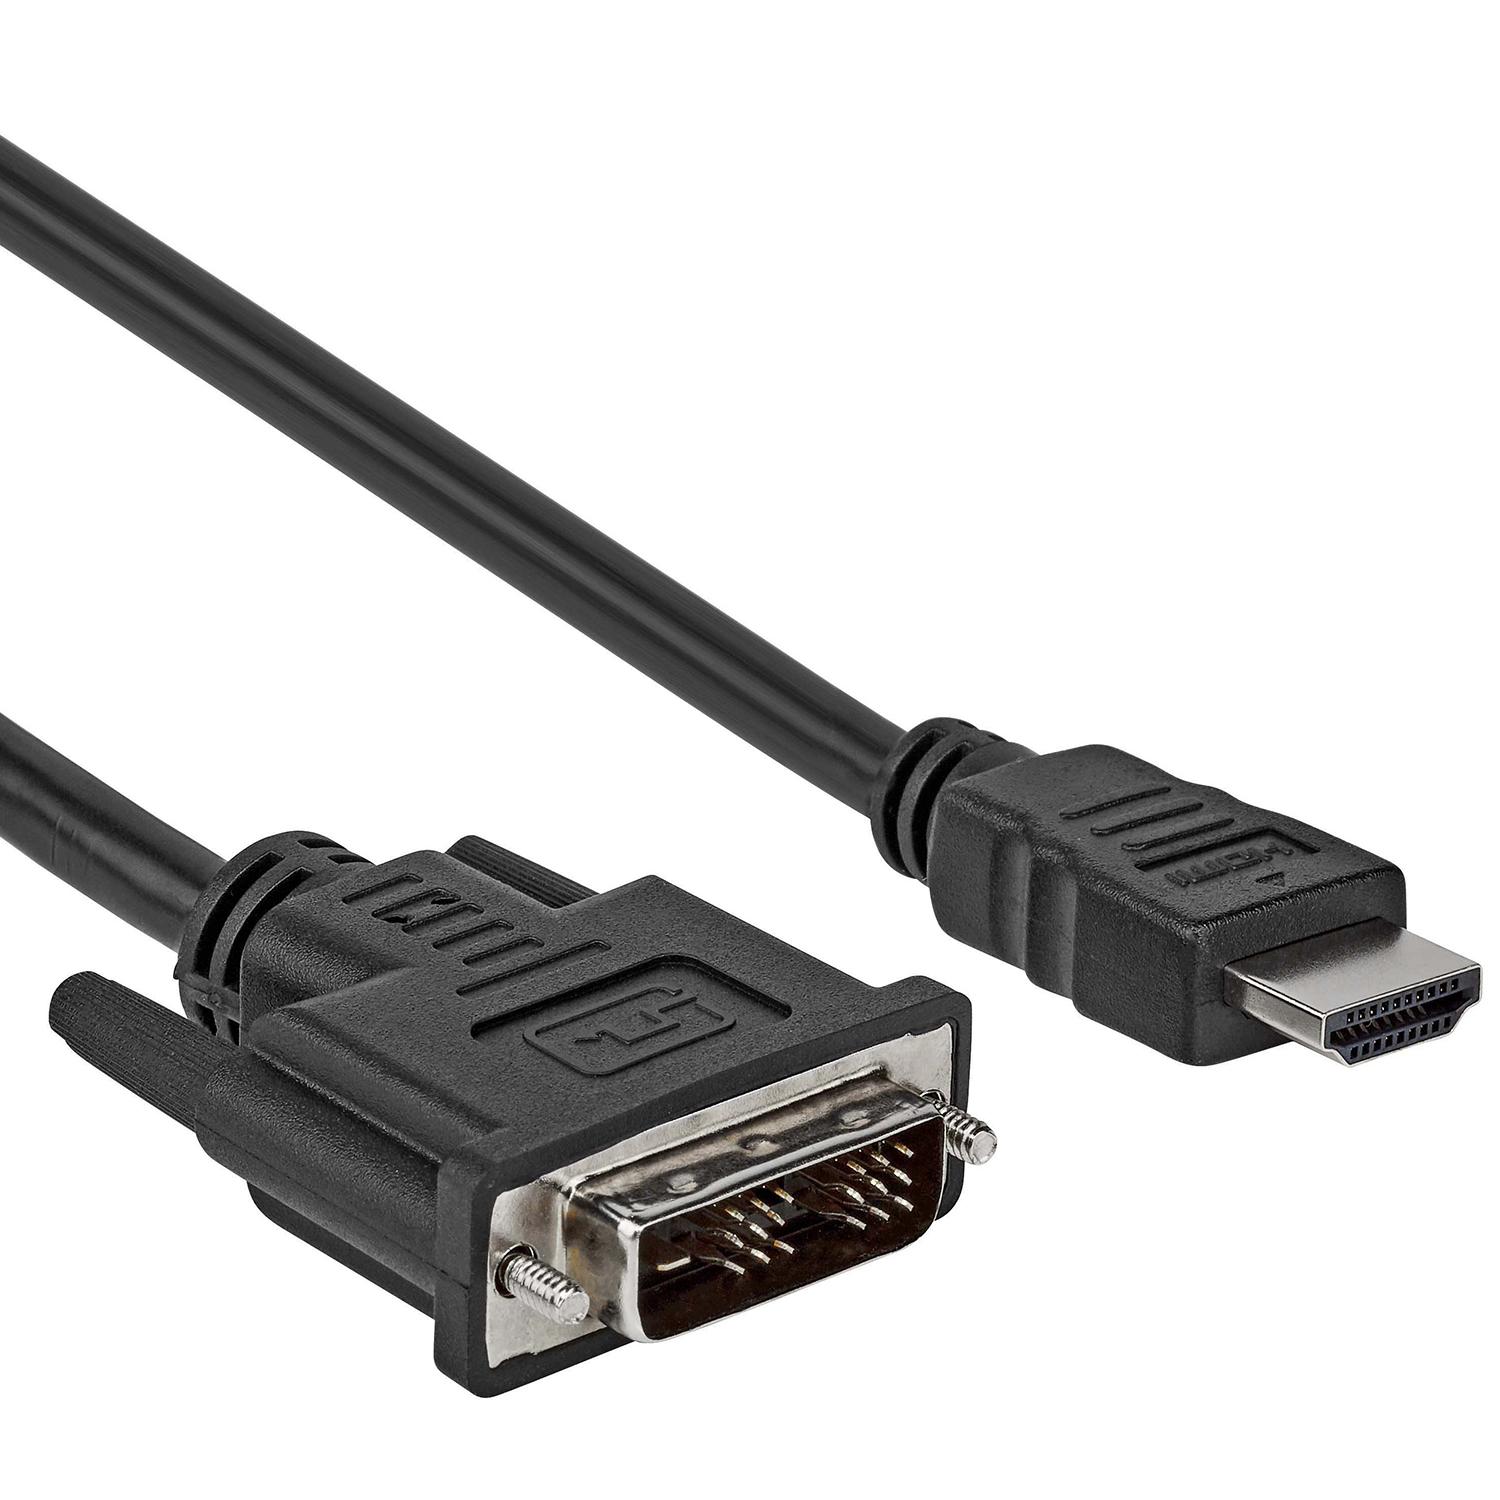 Van Dvi Naar Hdmi DVI naar HDMI kabel - DVI - HDMI Kabel - Zwart, Versie: Single Link (18+1  Polig), Aansluiting 1: DVI D male, Aansluiting 2: HDMI male, Verguld: Nee,  1 meter.